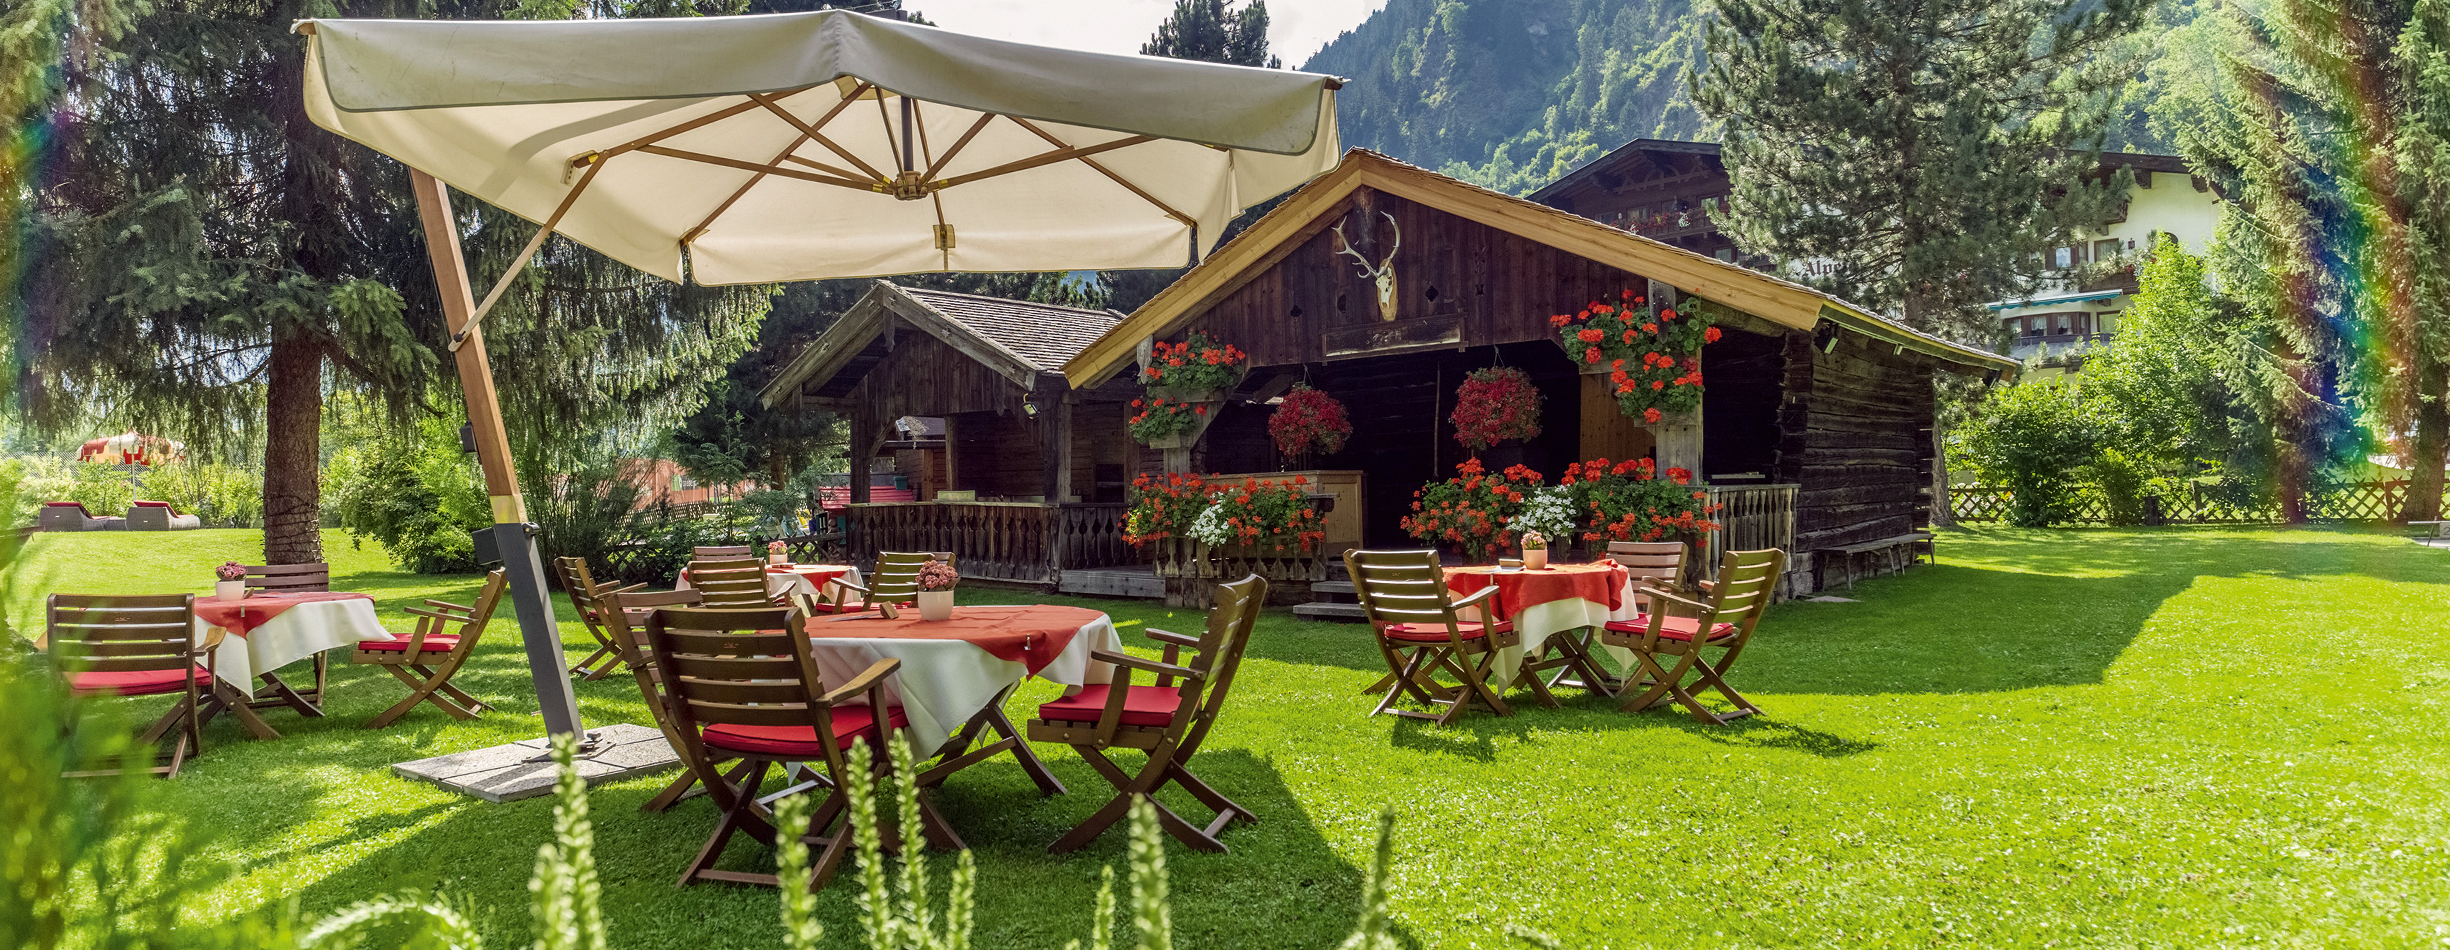 Wellnesshotel in den Alpen-Relais_Chateaux_Spa_Hotel_Jagdhof_Neustift_Tirol_Stubai_Austria_5_Sterne_Sommer-c-avmedia-Georg-Schoenwiese